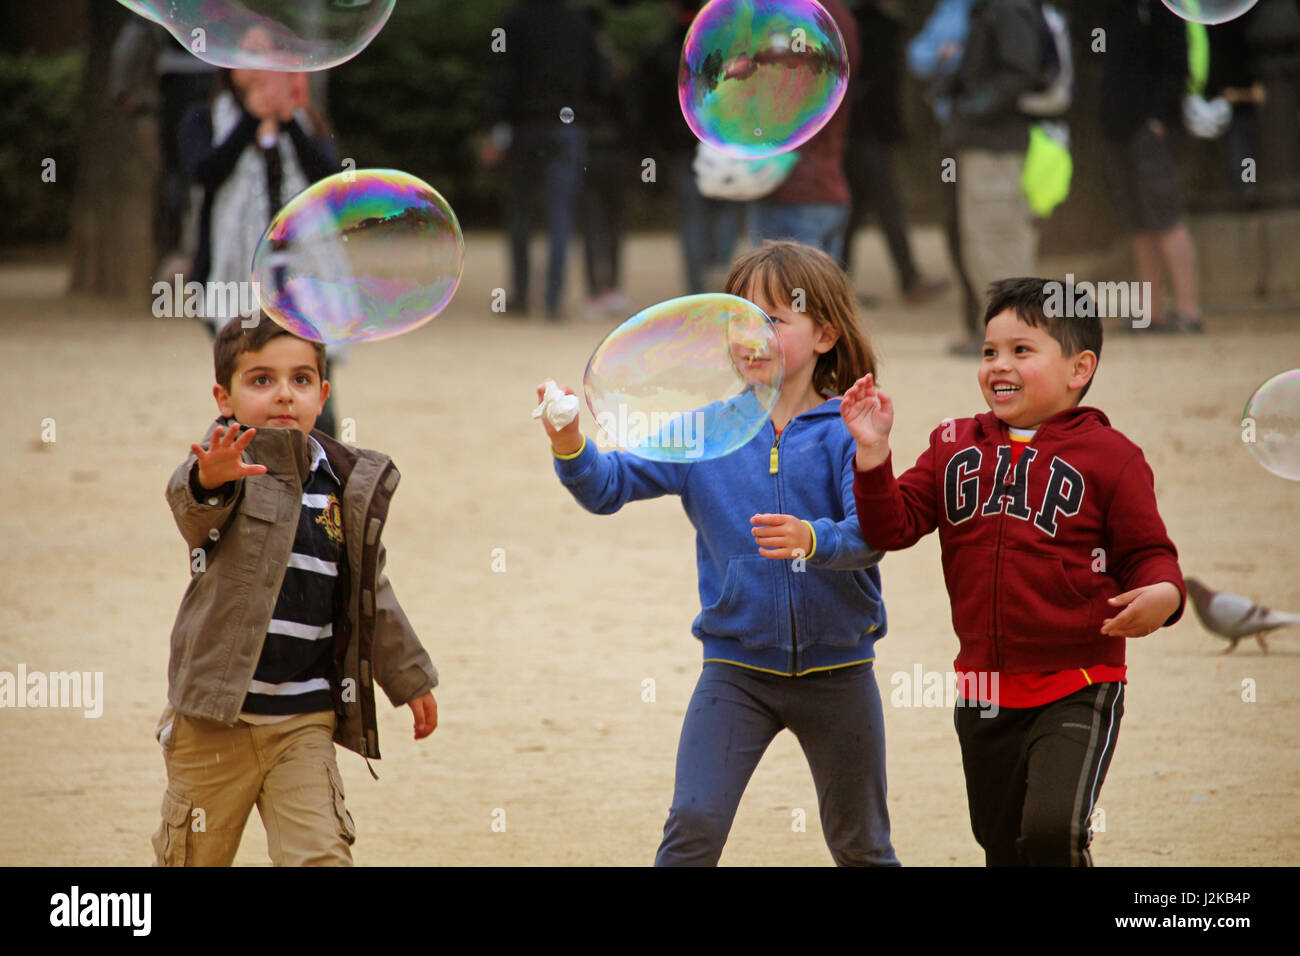 BARCELONA/SPAIN - 19 APRIL 2017: Childrean playing with big soap bubbles in Barcelona's Ciutadella park Stock Photo